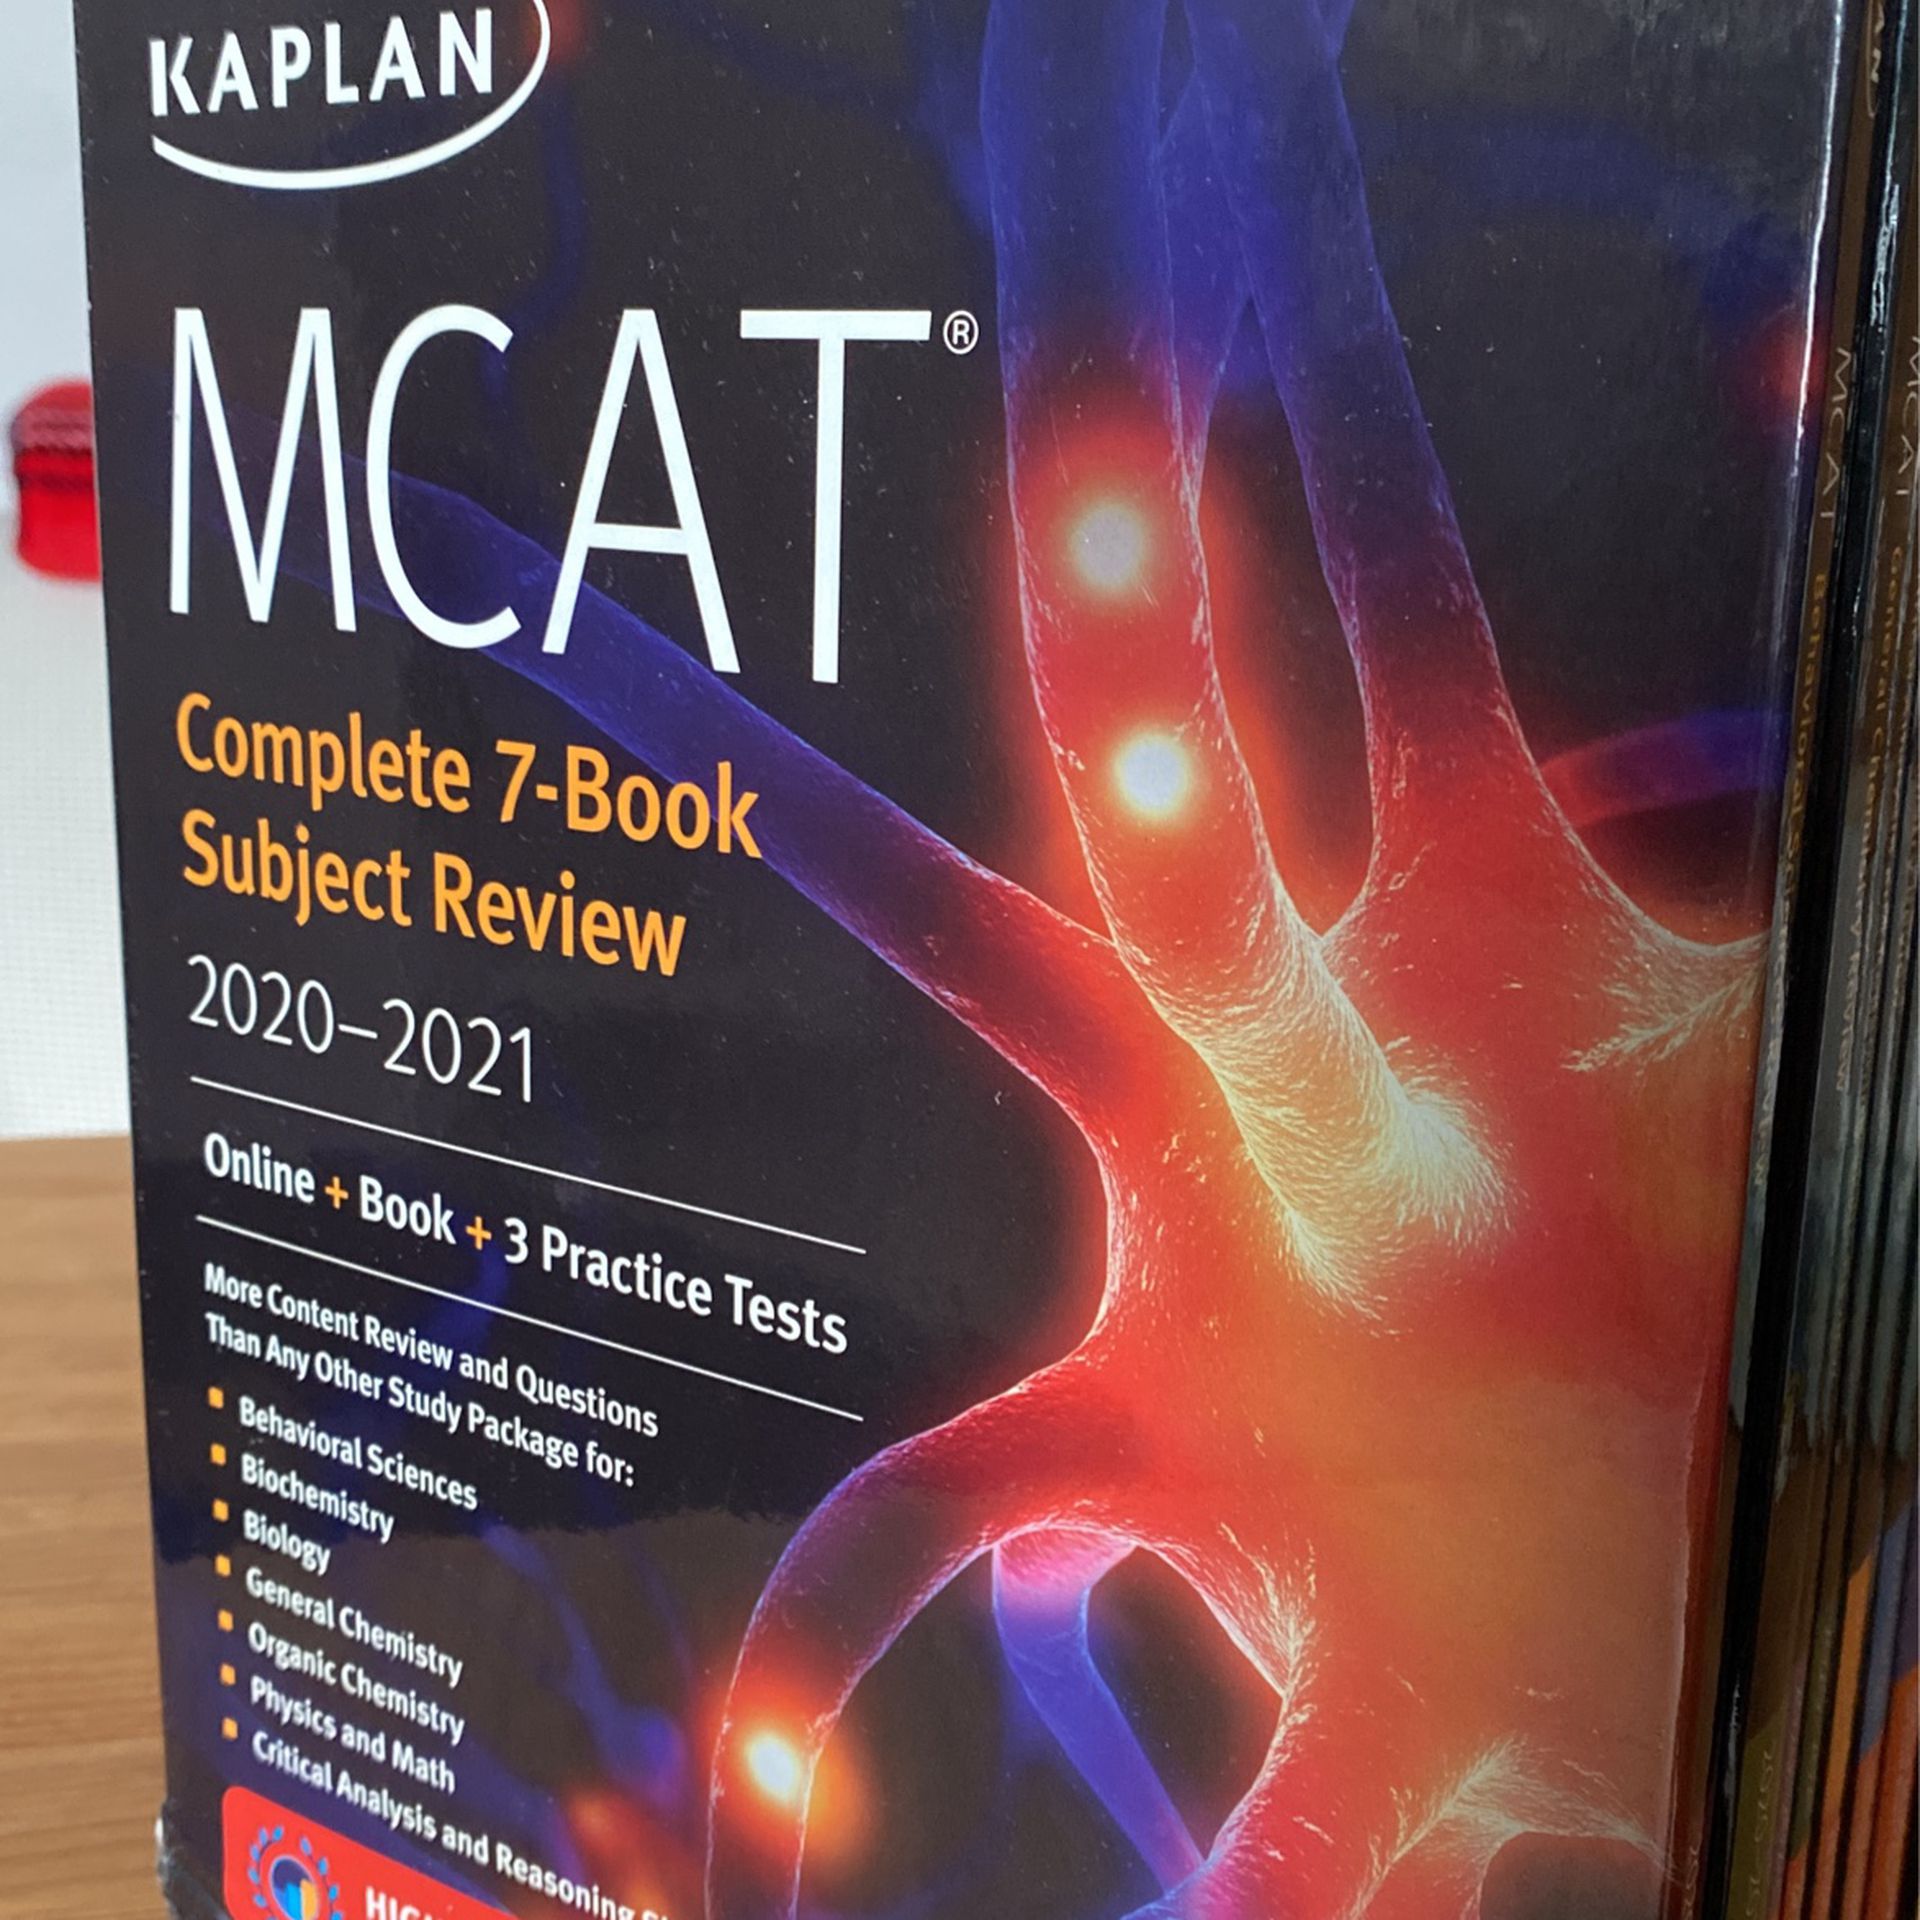 Kaplan MCAT Complete 7 Book Subject Review 2020-2021